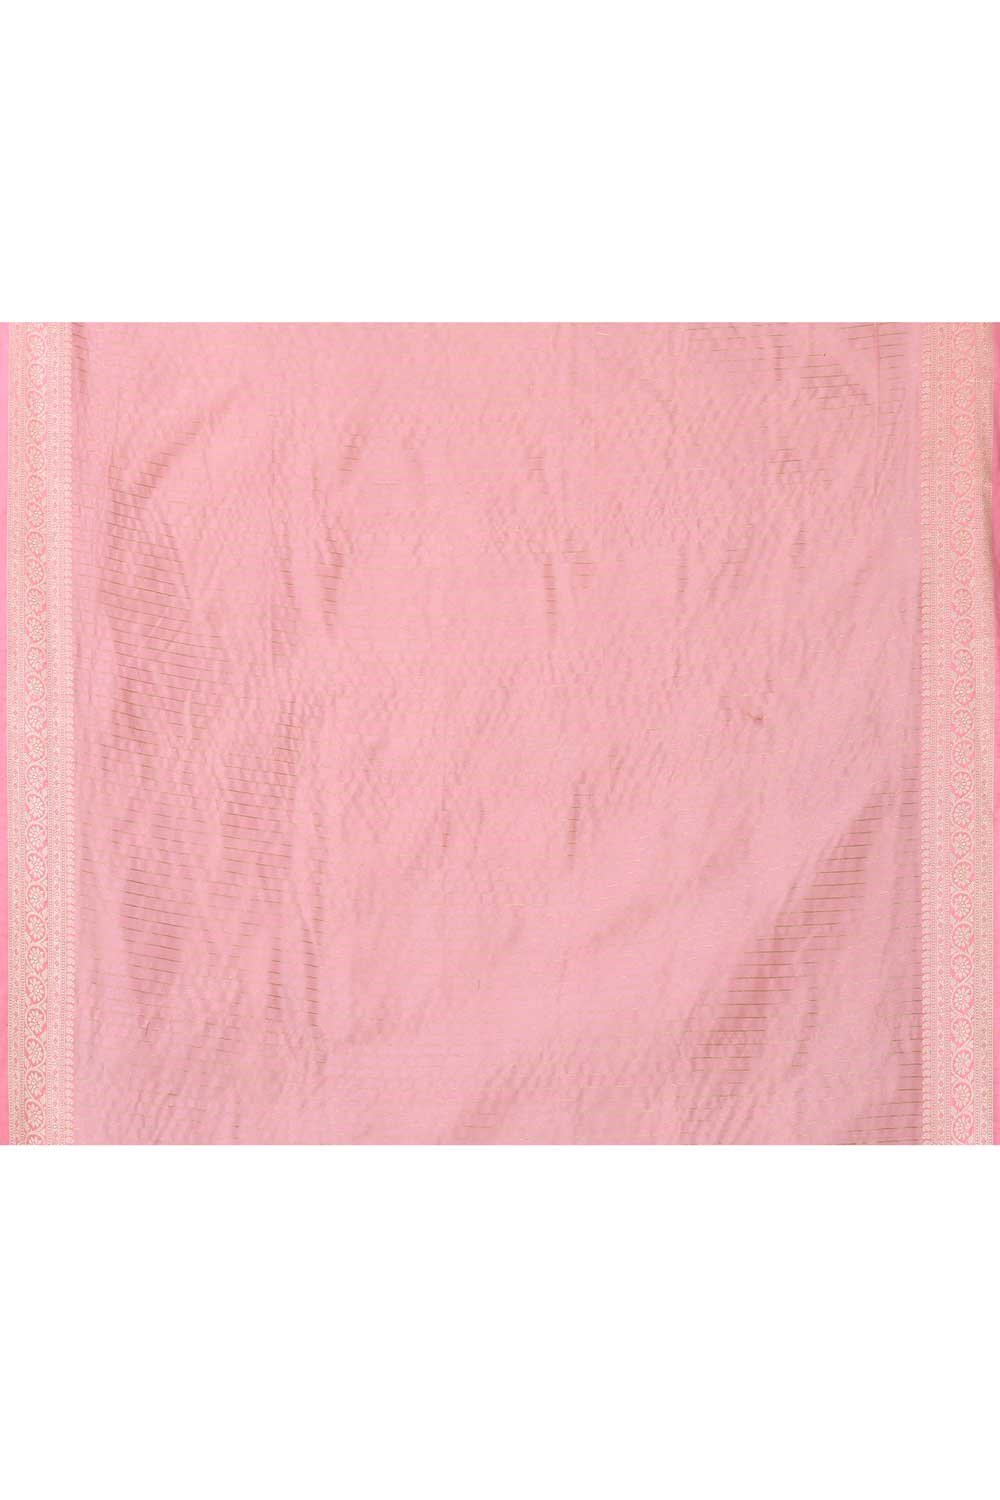 Rose Gold Pure Cotton Silk Banaras Handloom Saree